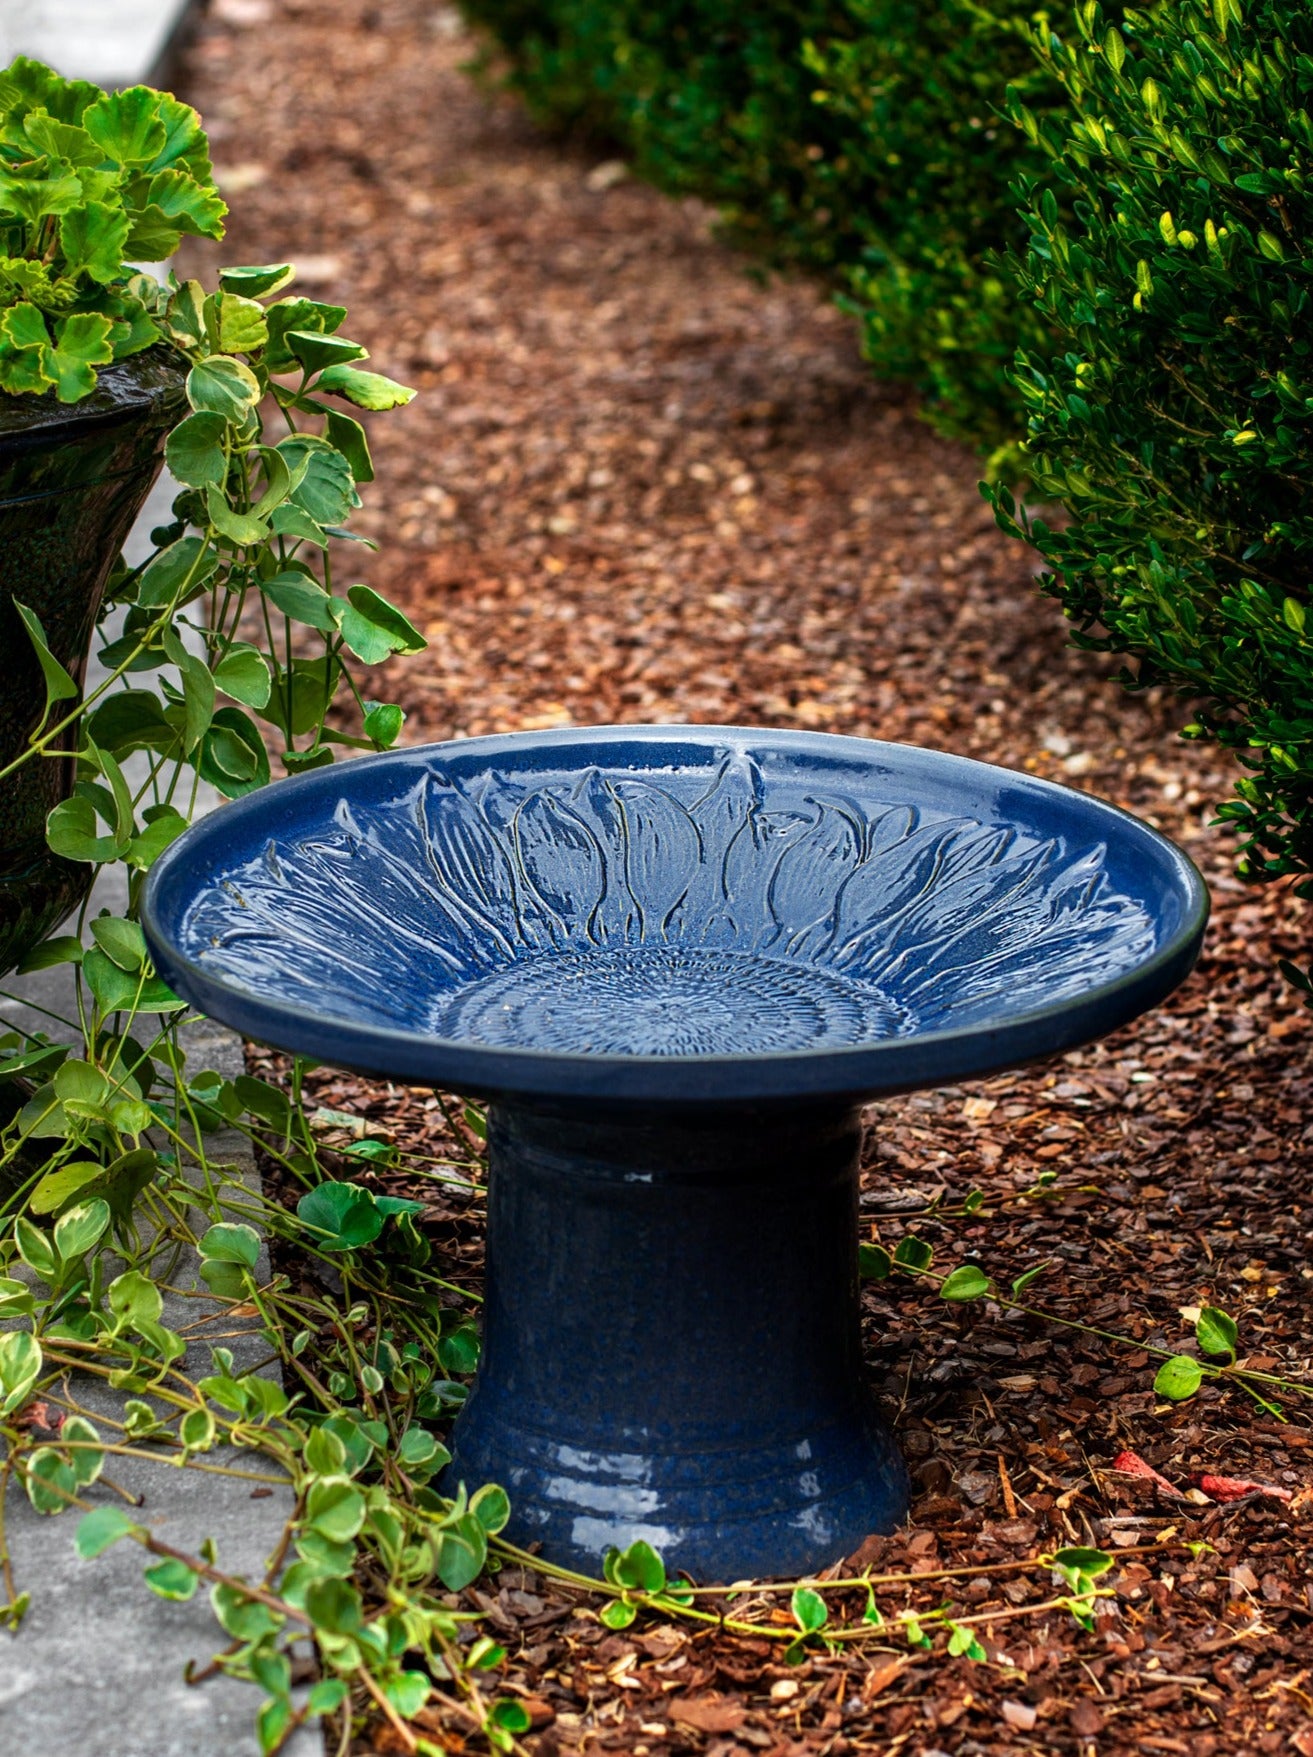 short sunflower design birdbath in blue glaze in landscaped area